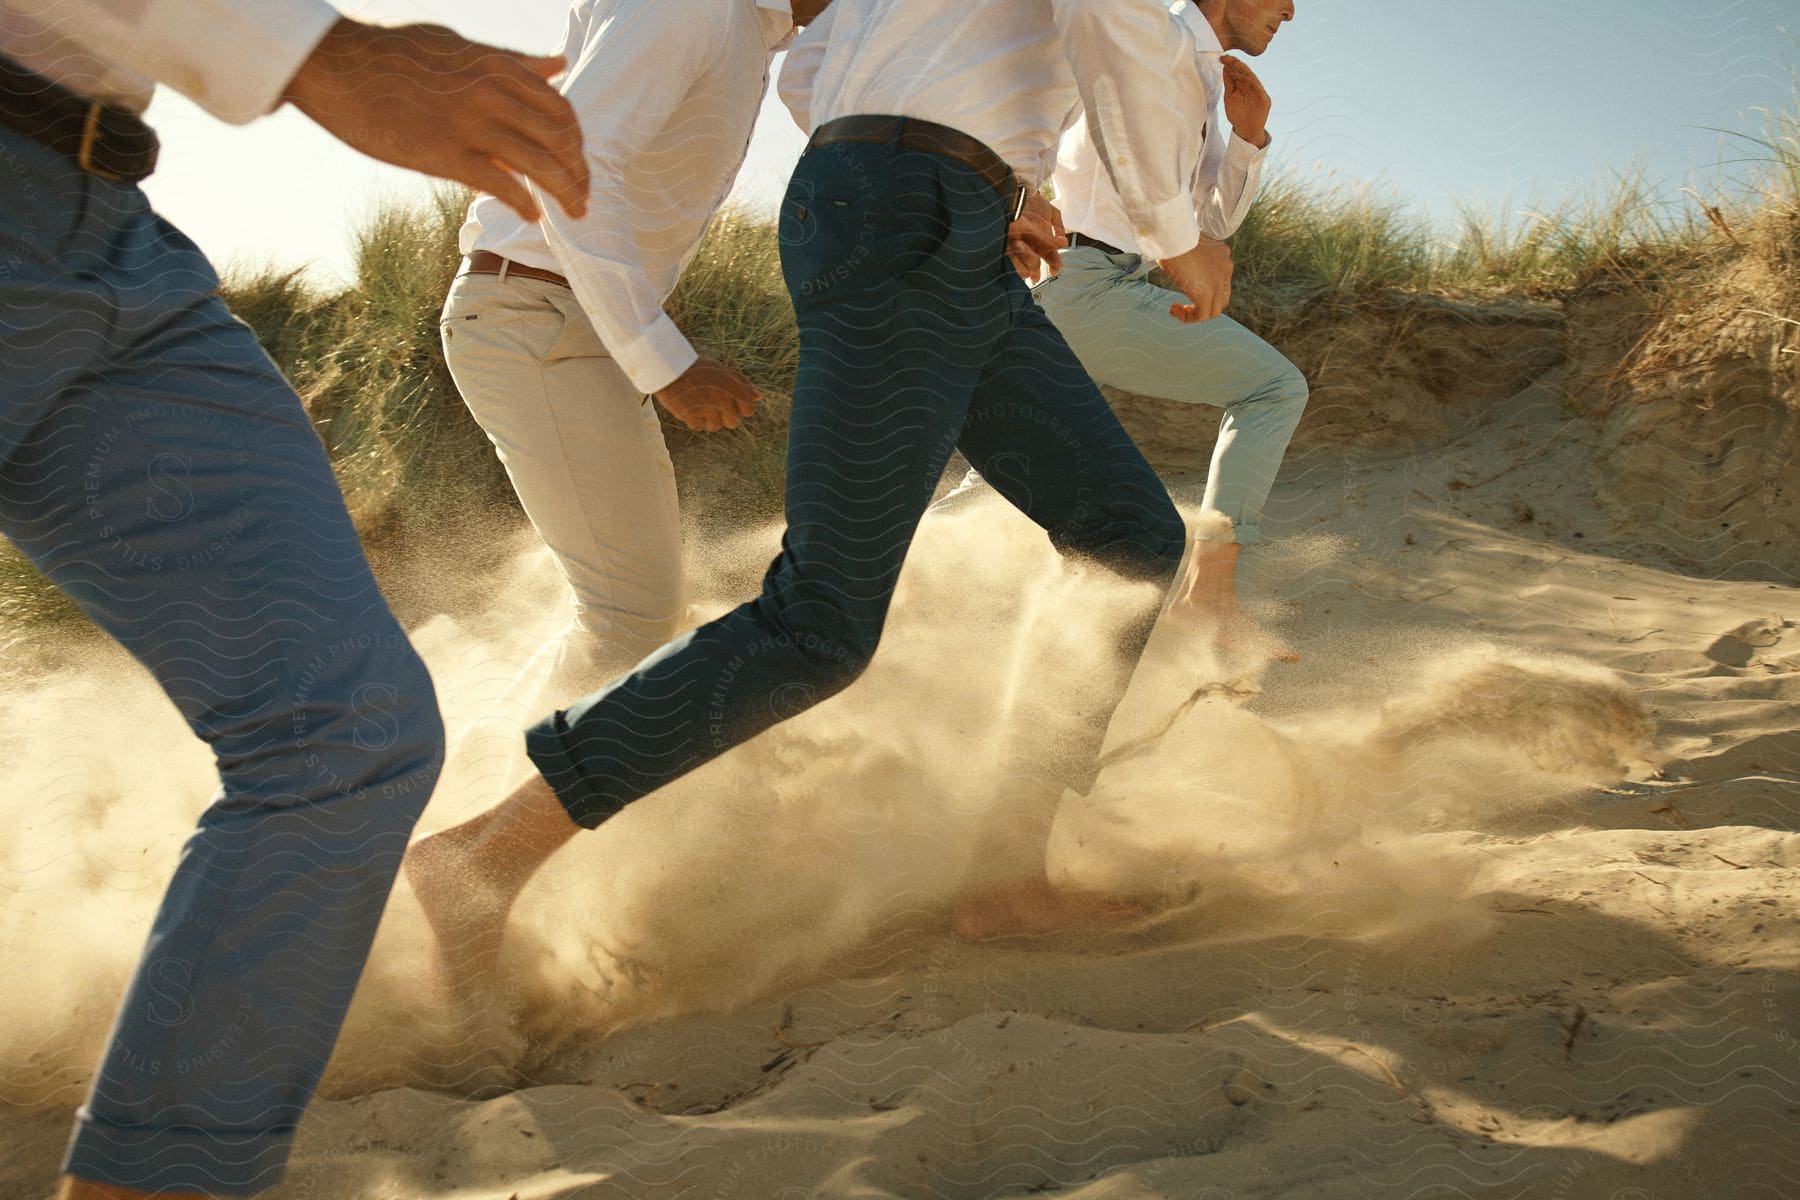 Men racing barefoot on the beach